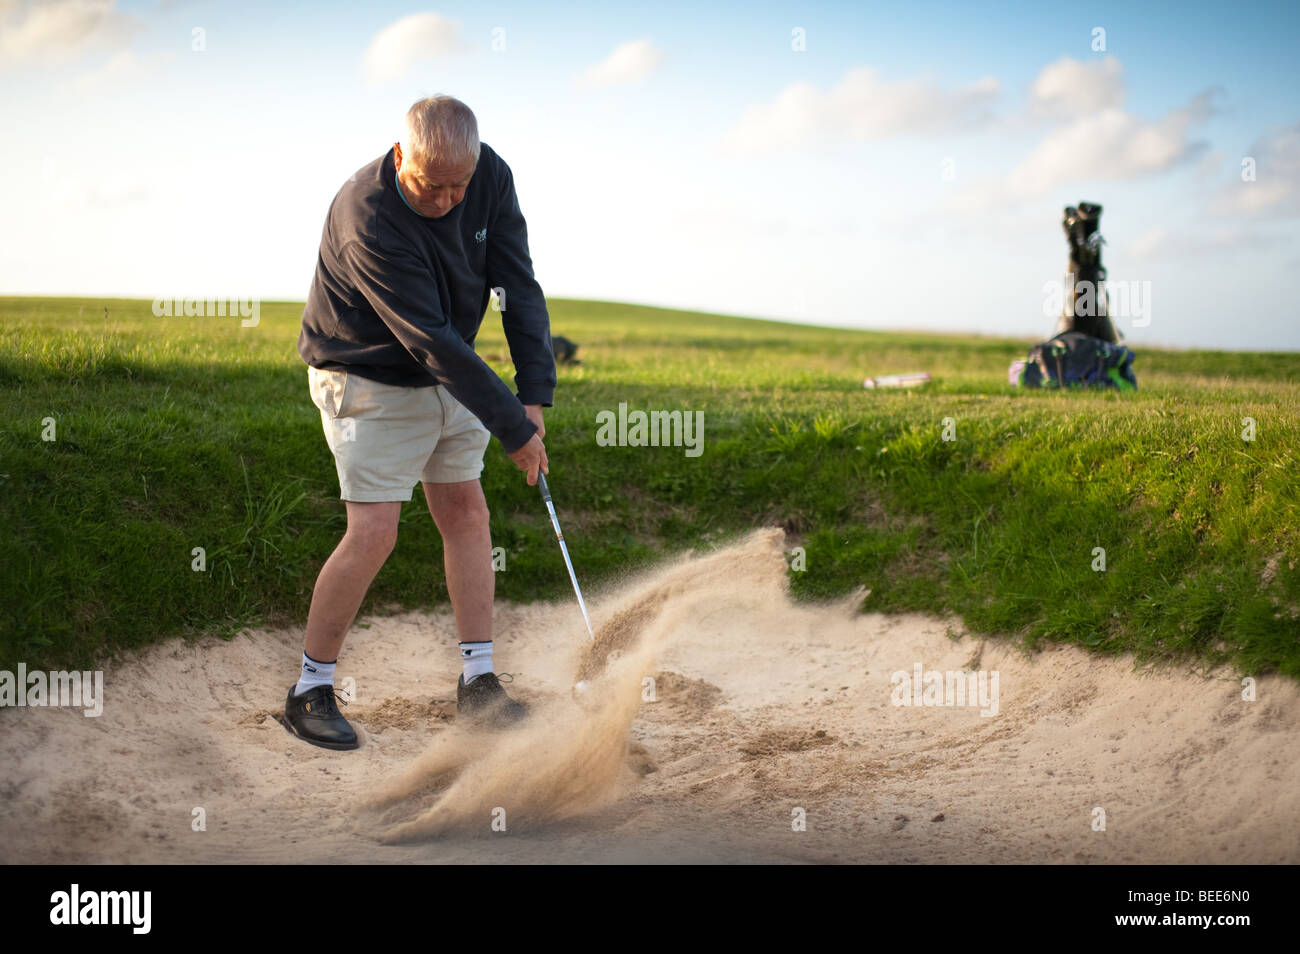 Golfer in a bunker Stock Photo